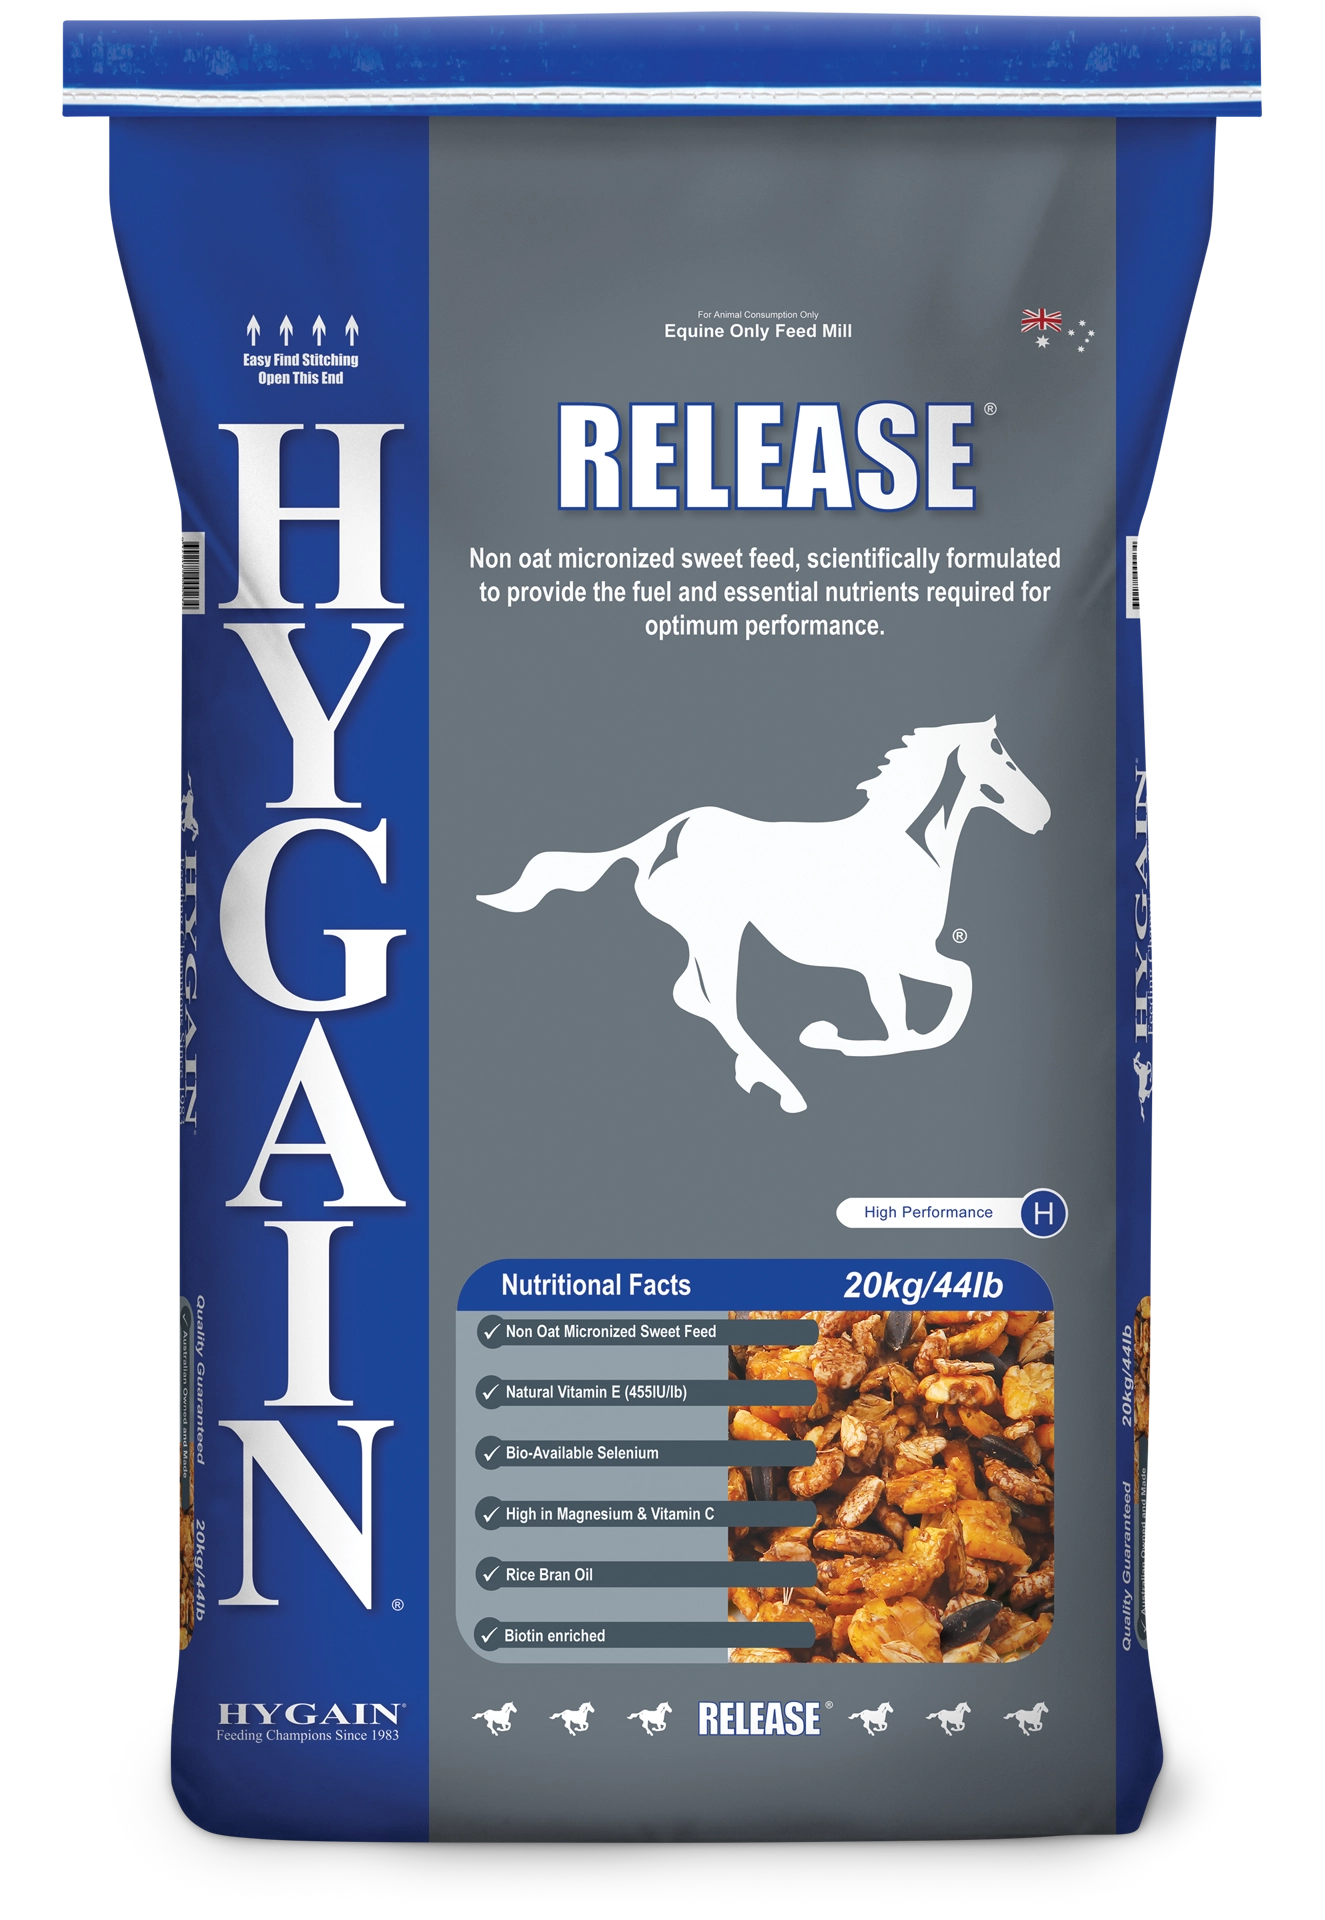 Hygain Release bag